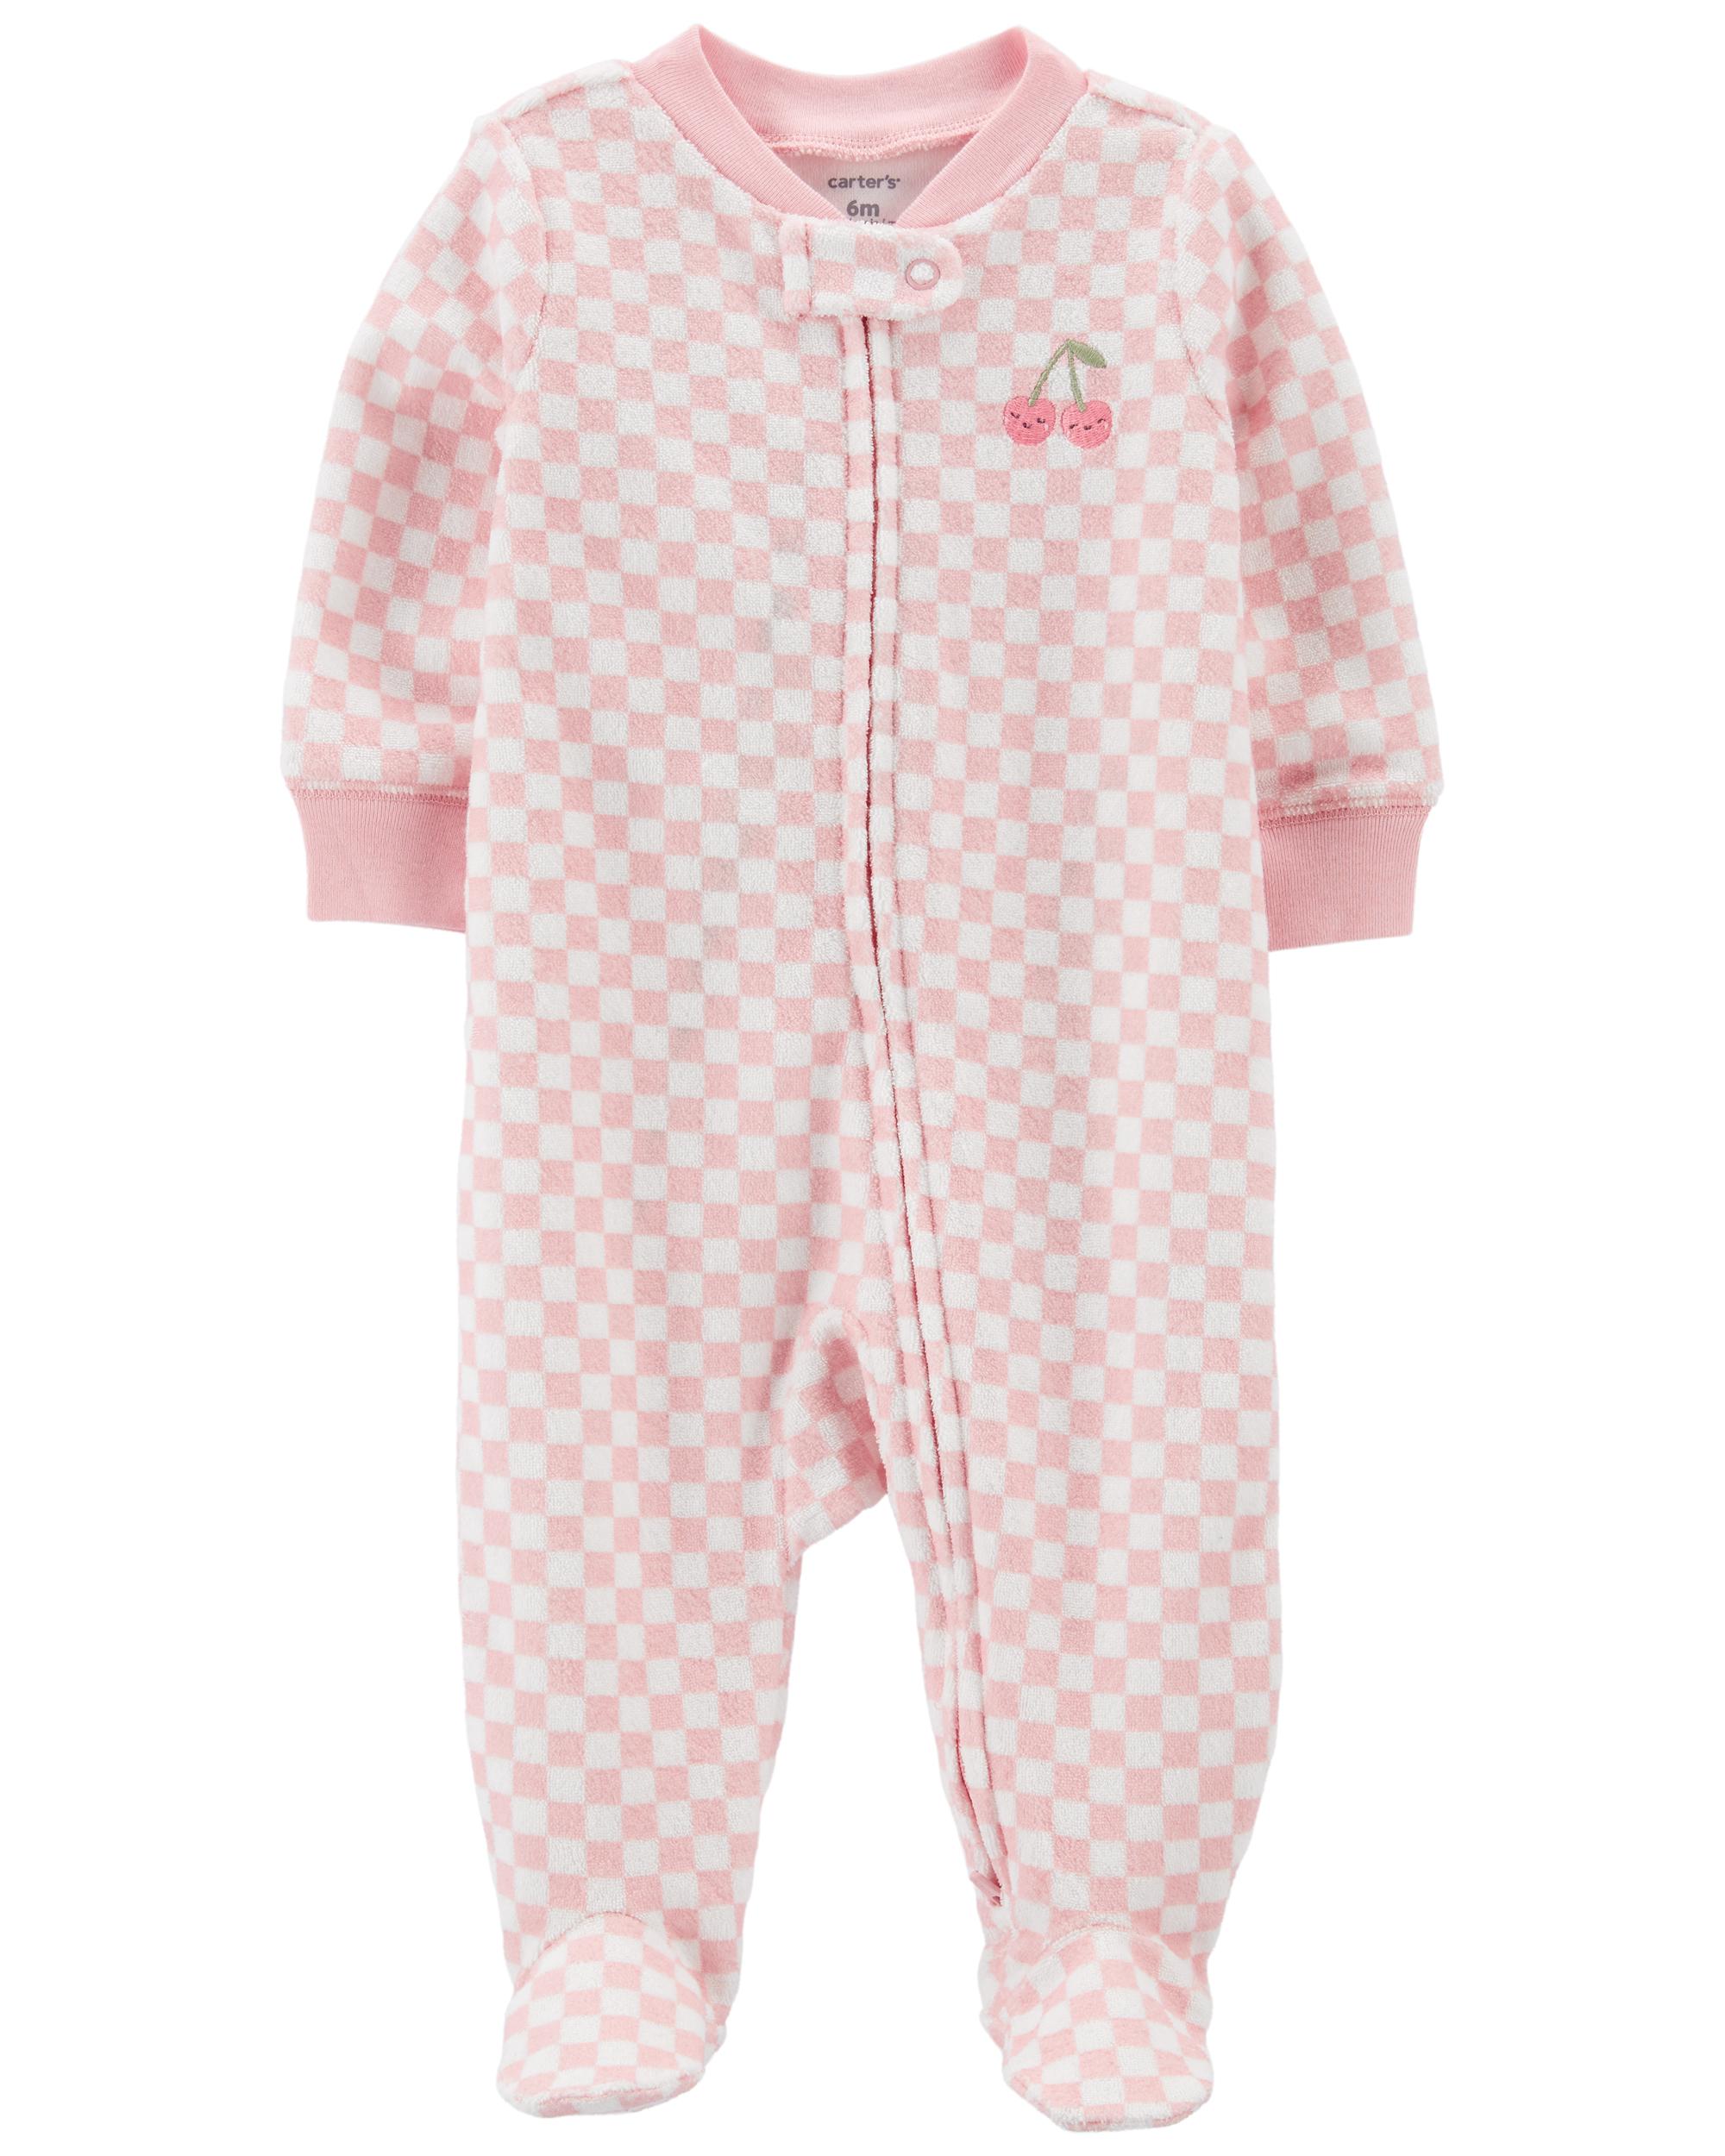 Embroidered Cherry 2-Way Zip Sleeper Pyjamas